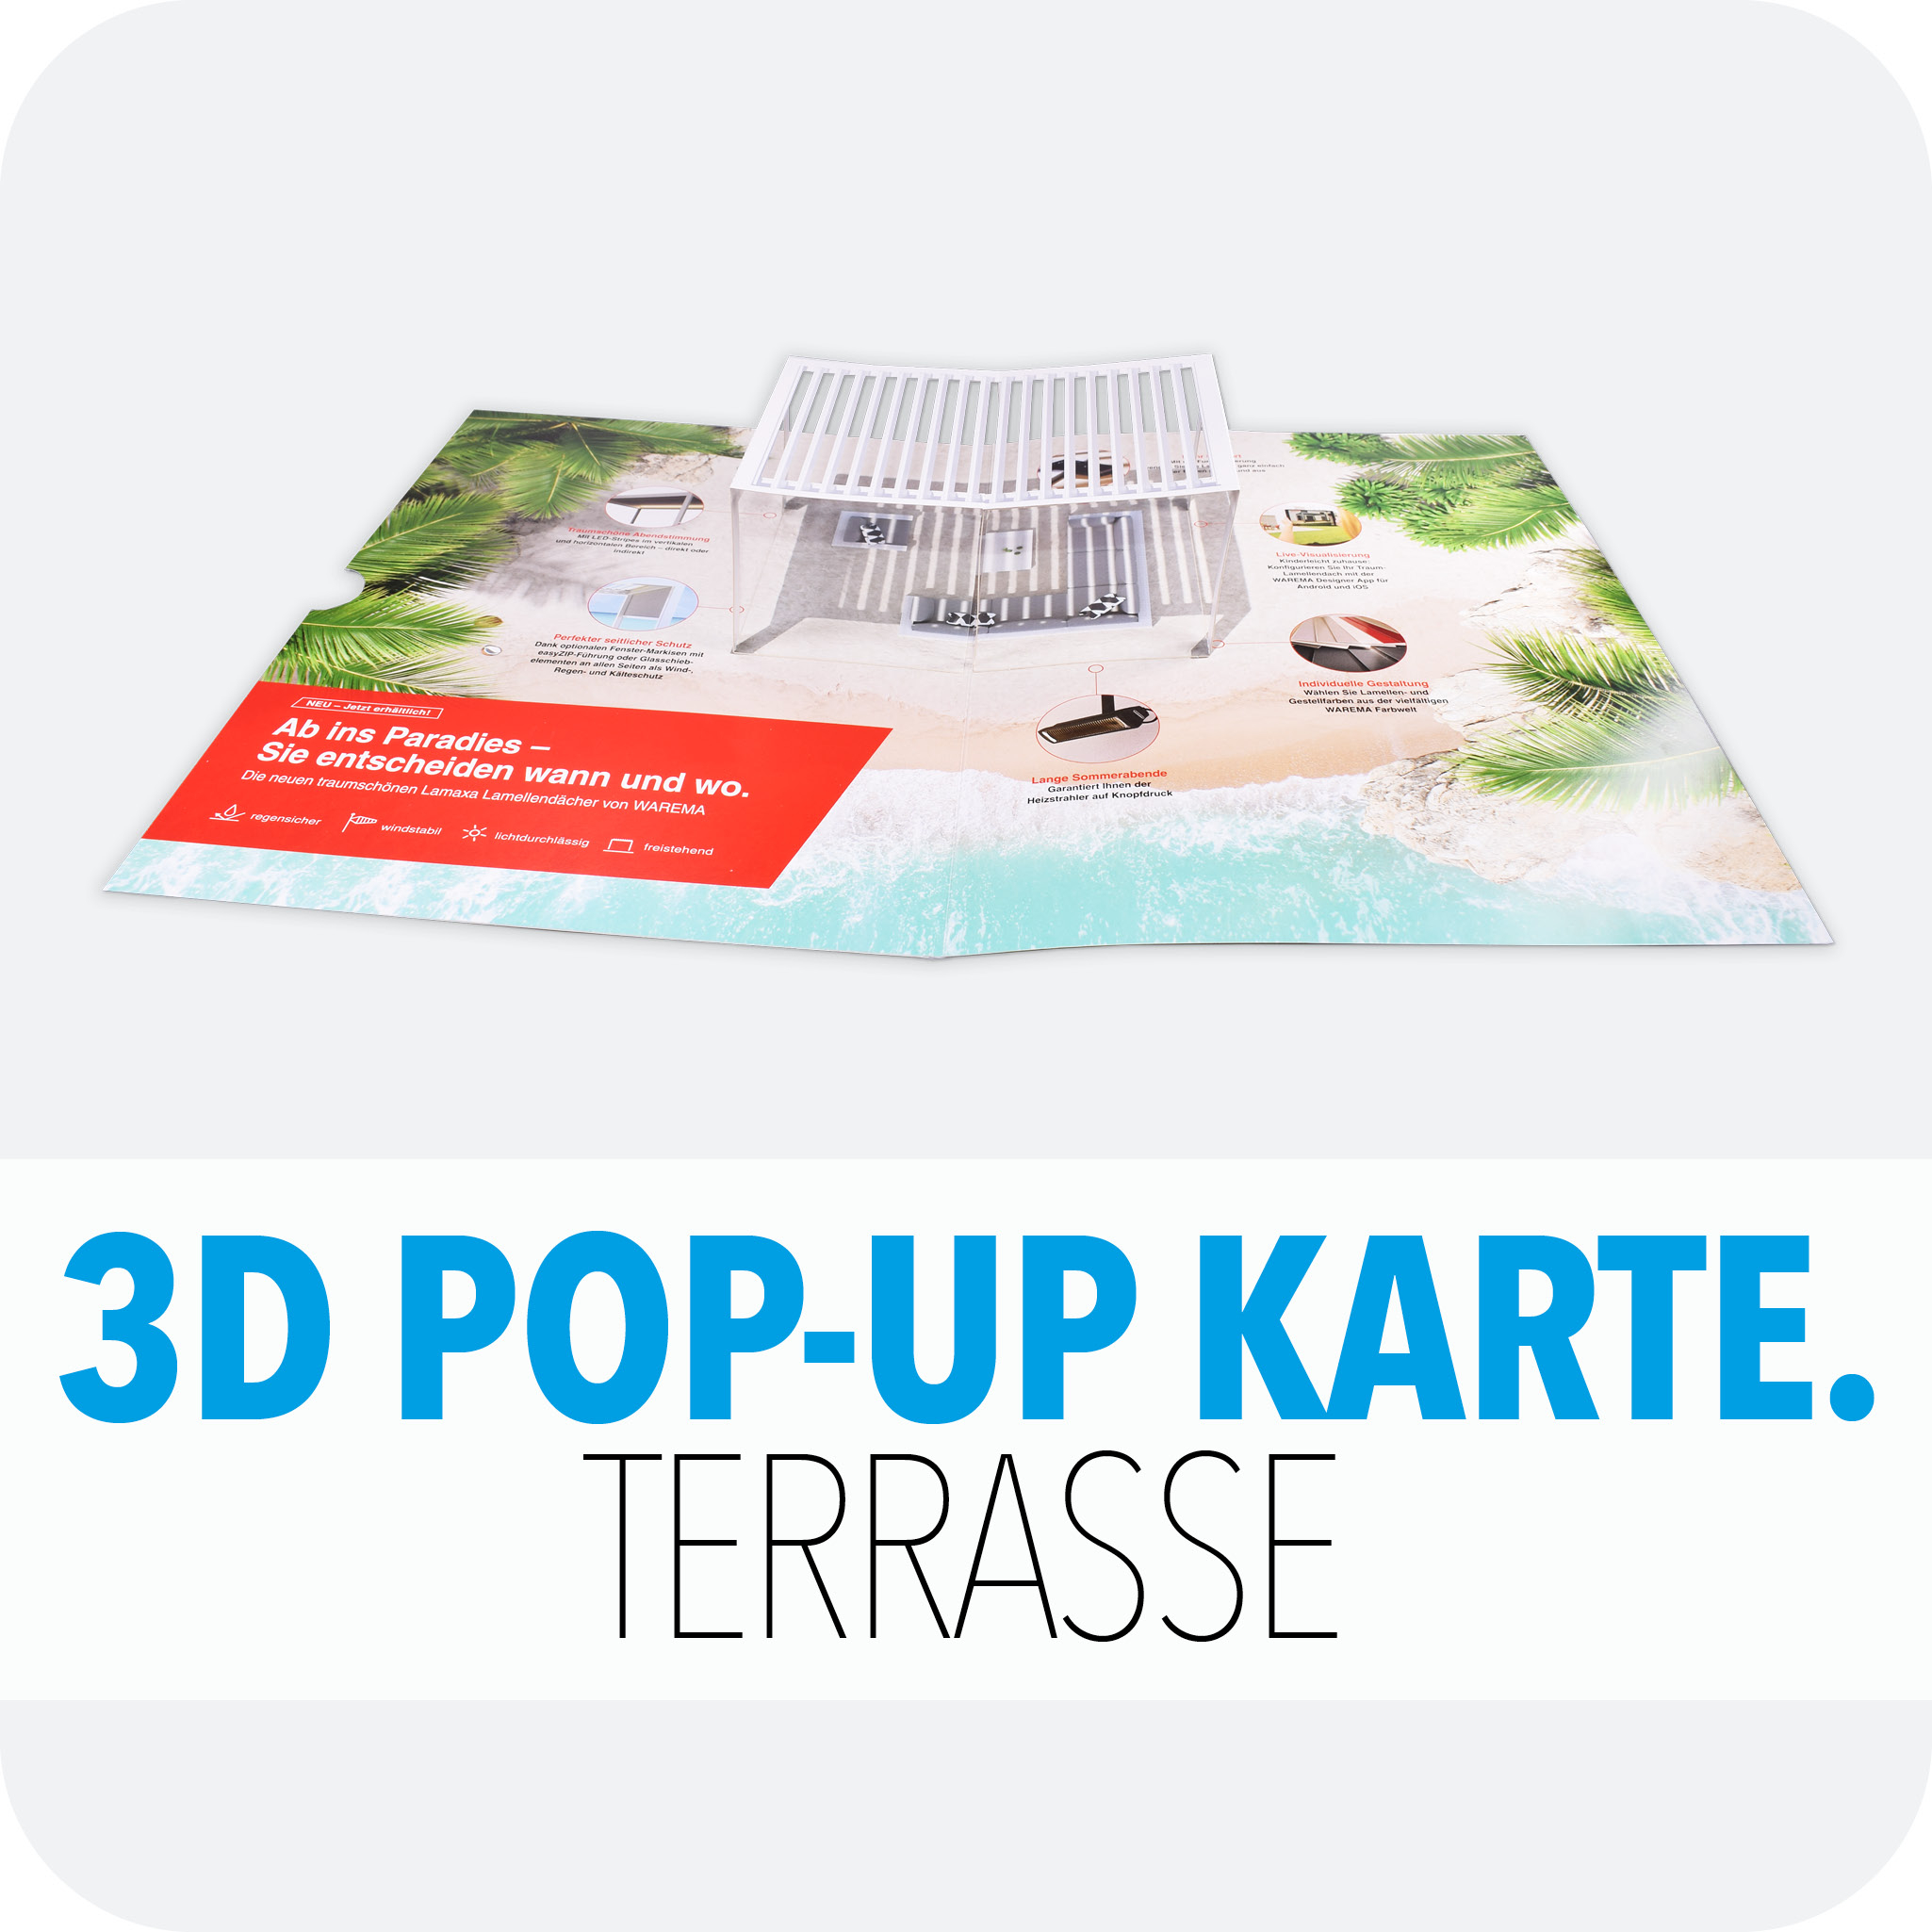 3D Pop-Up Karte Terrasse